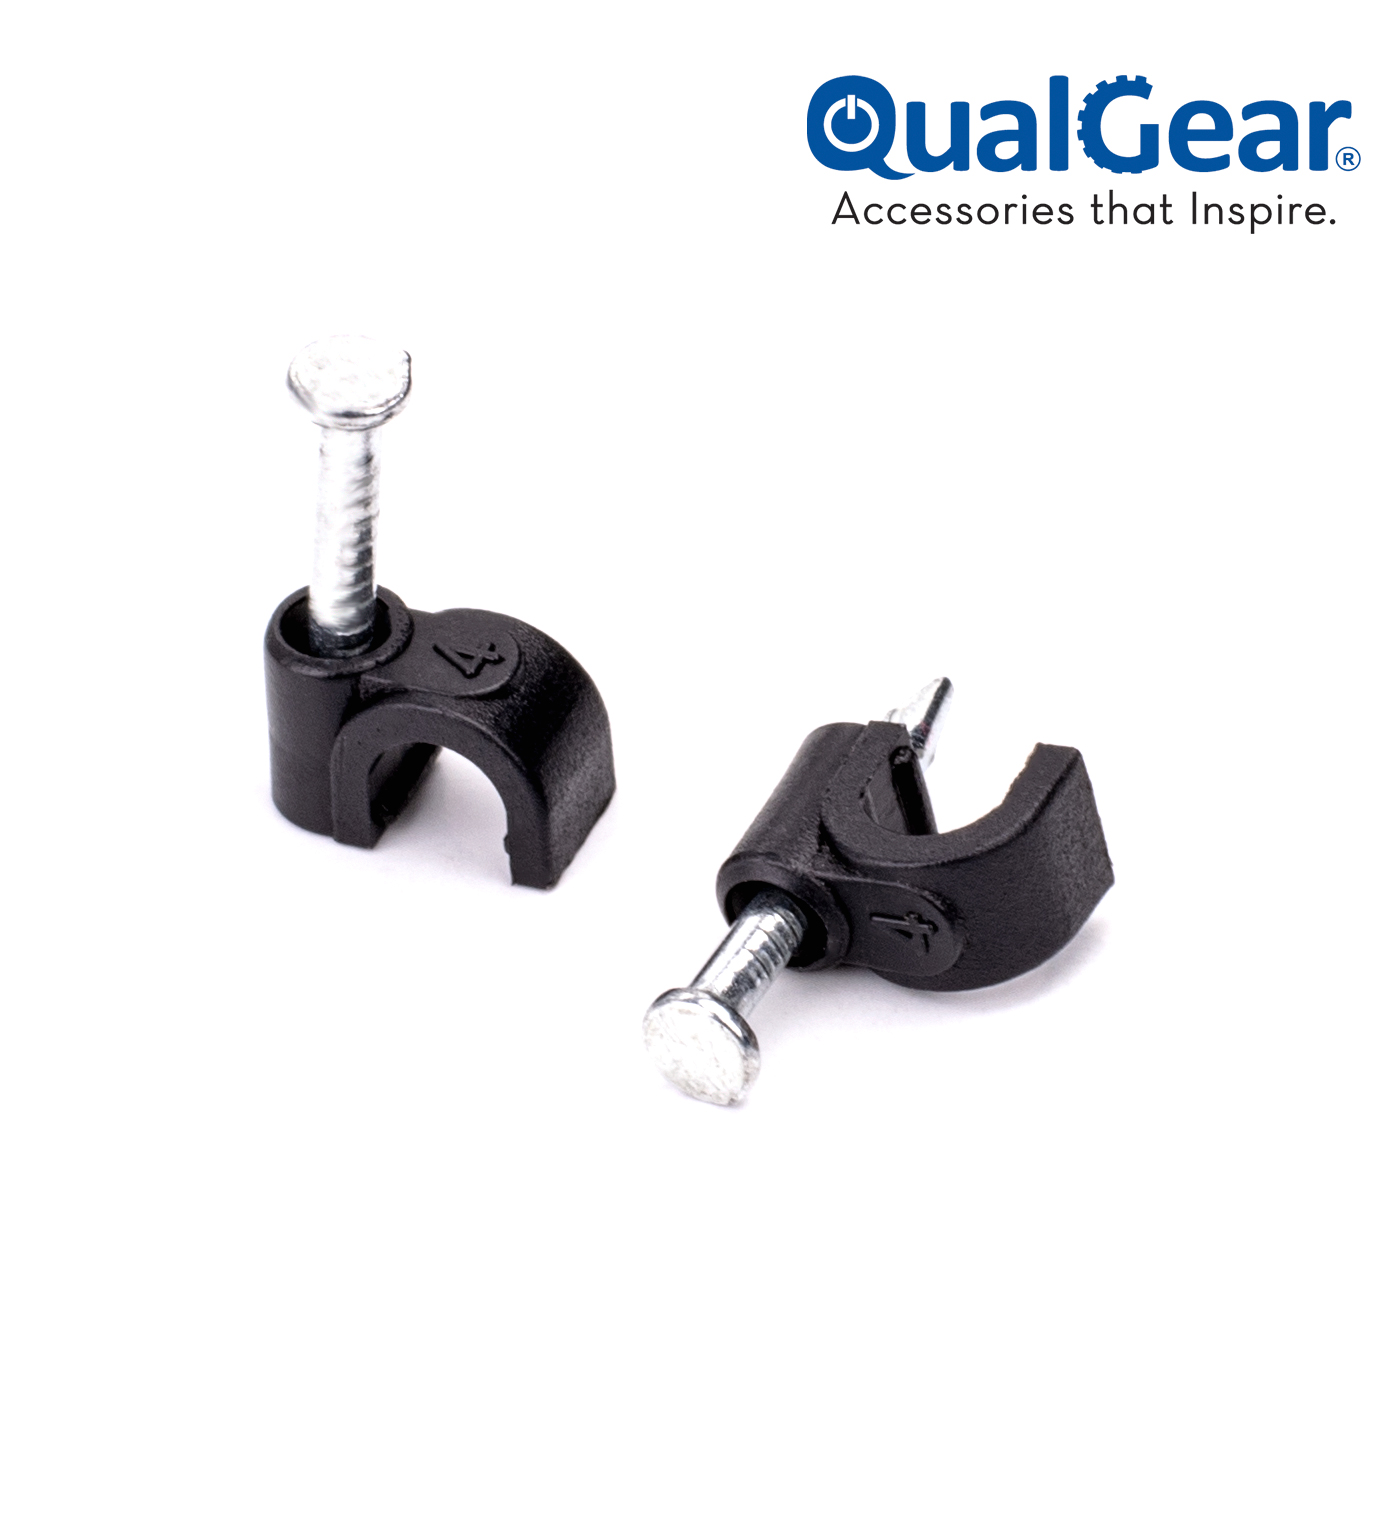 QualGear 4mm Cable Clips, Black, 100 Pack, CC4-B-100-P